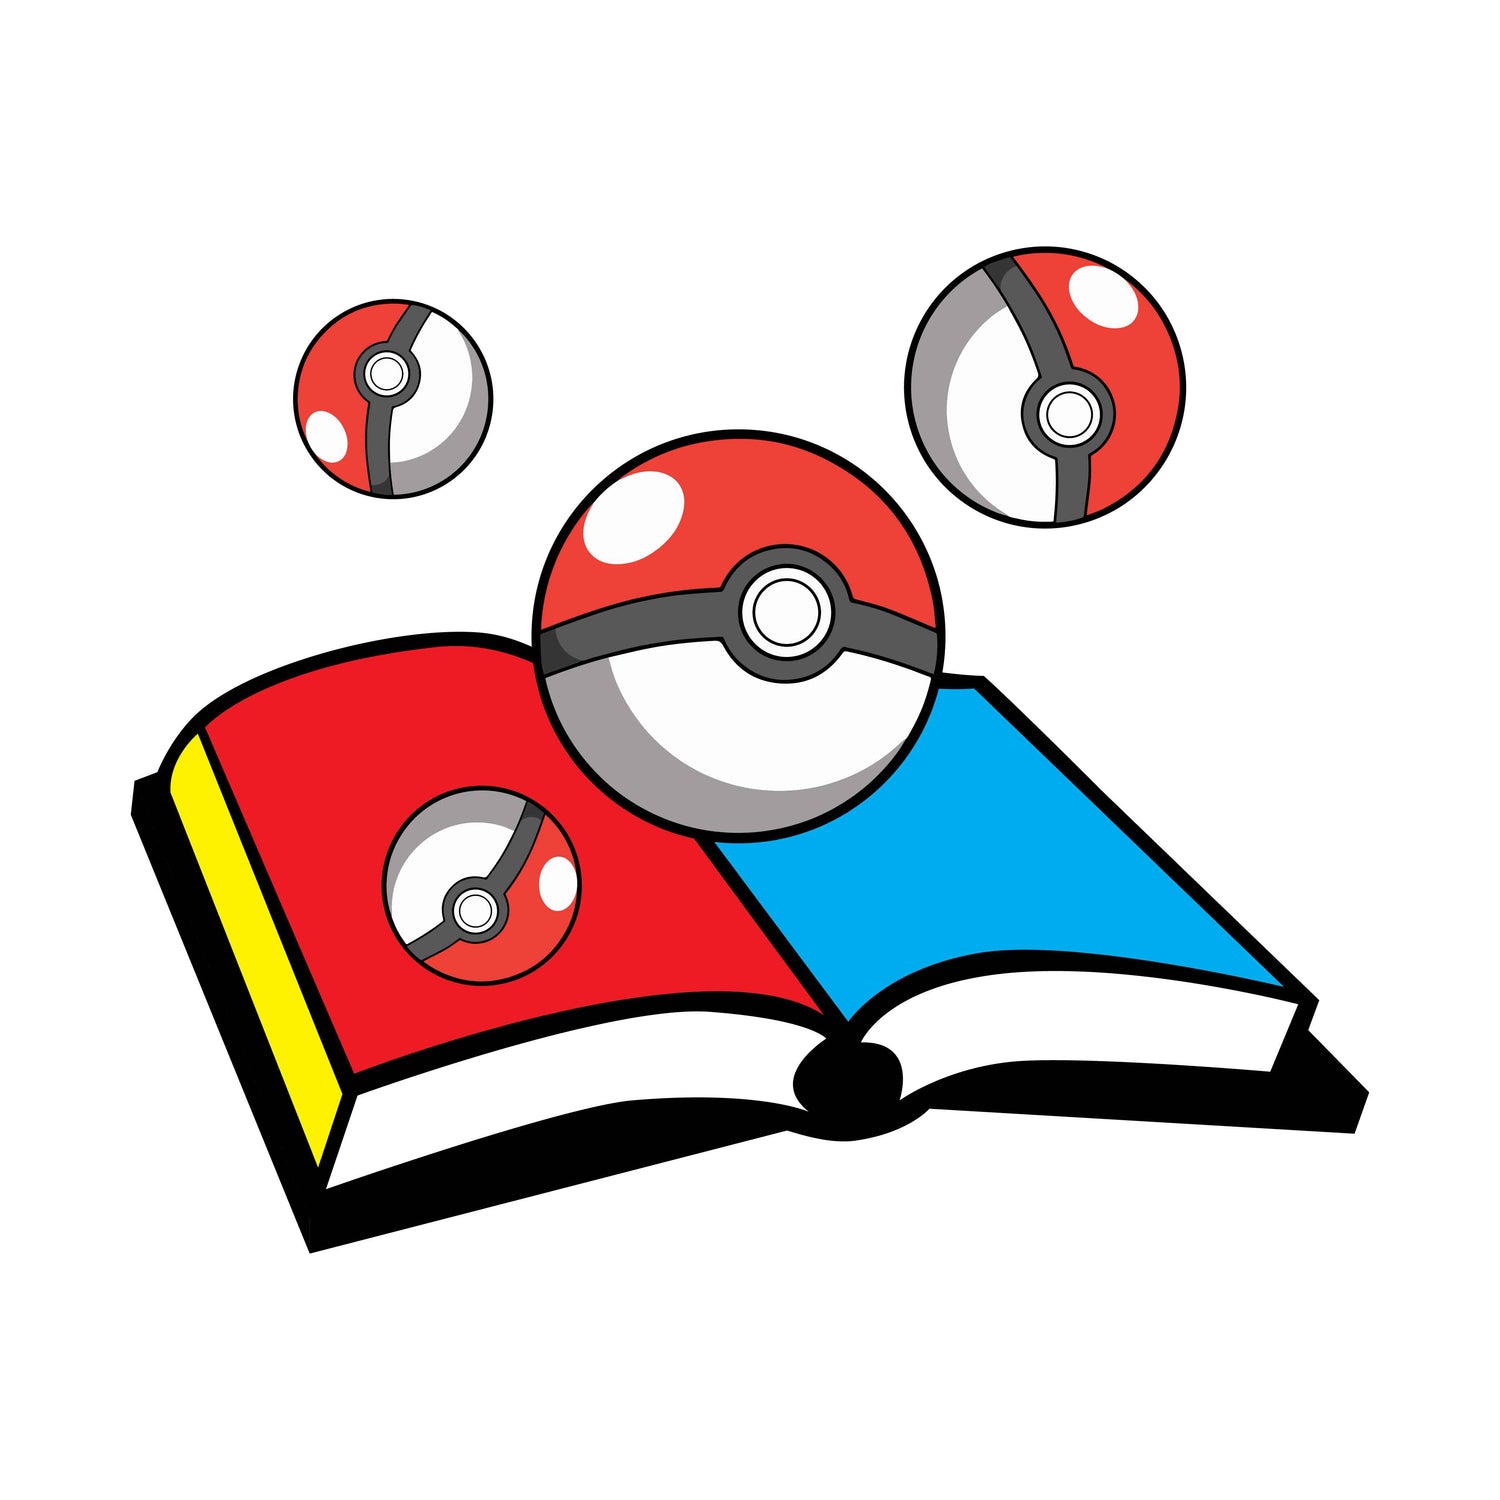 Cardpop logo of Pokemon rules